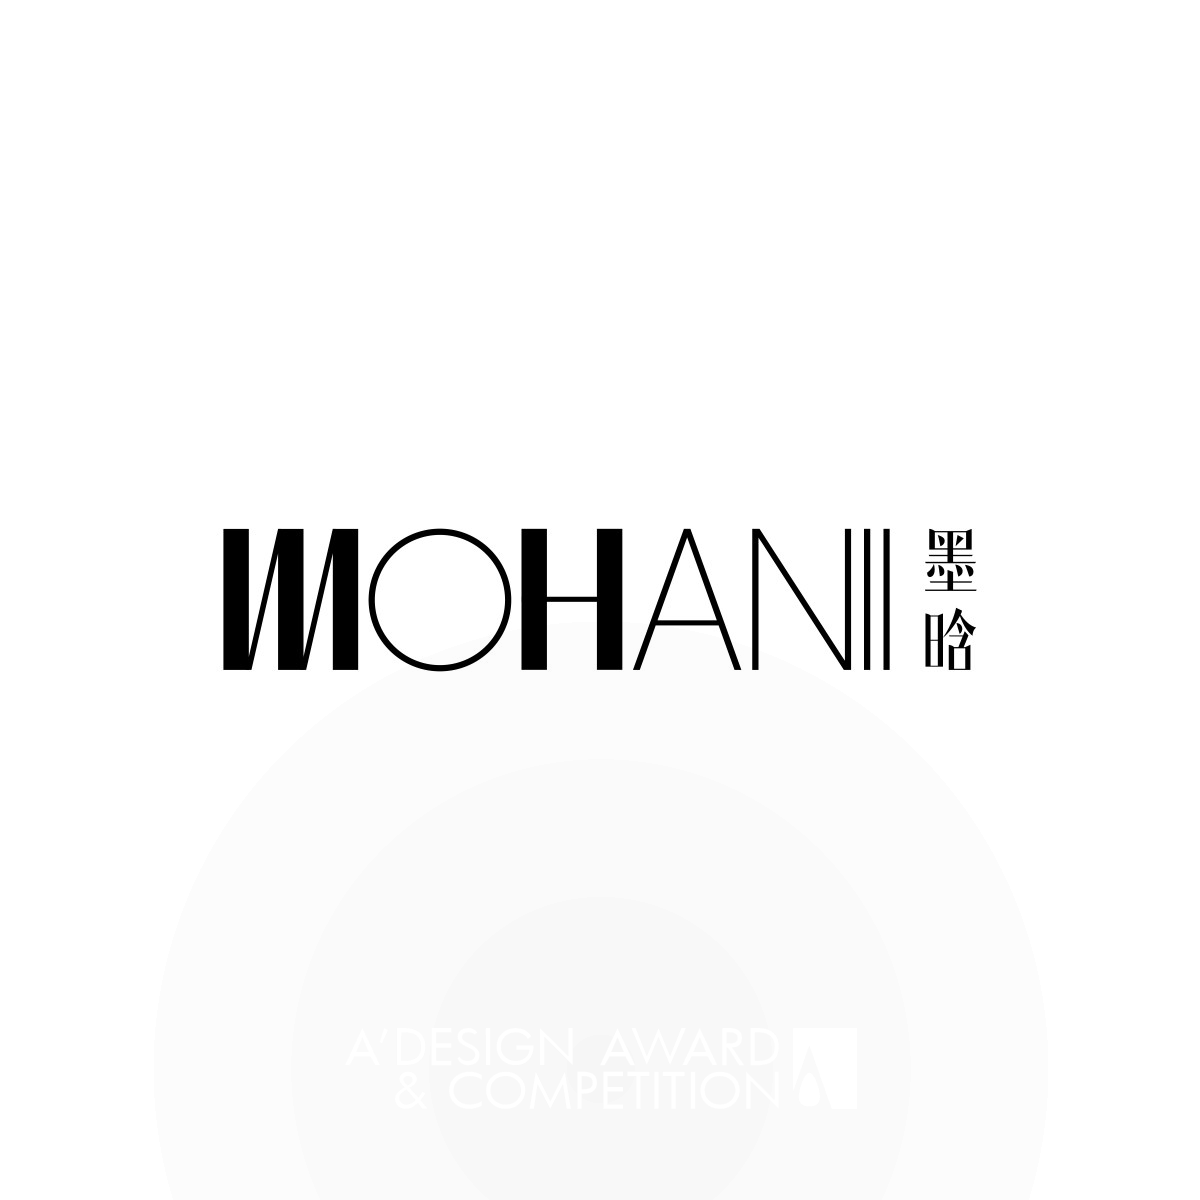 Mohanii: A Fusion of Oriental Spirit and Modern Design